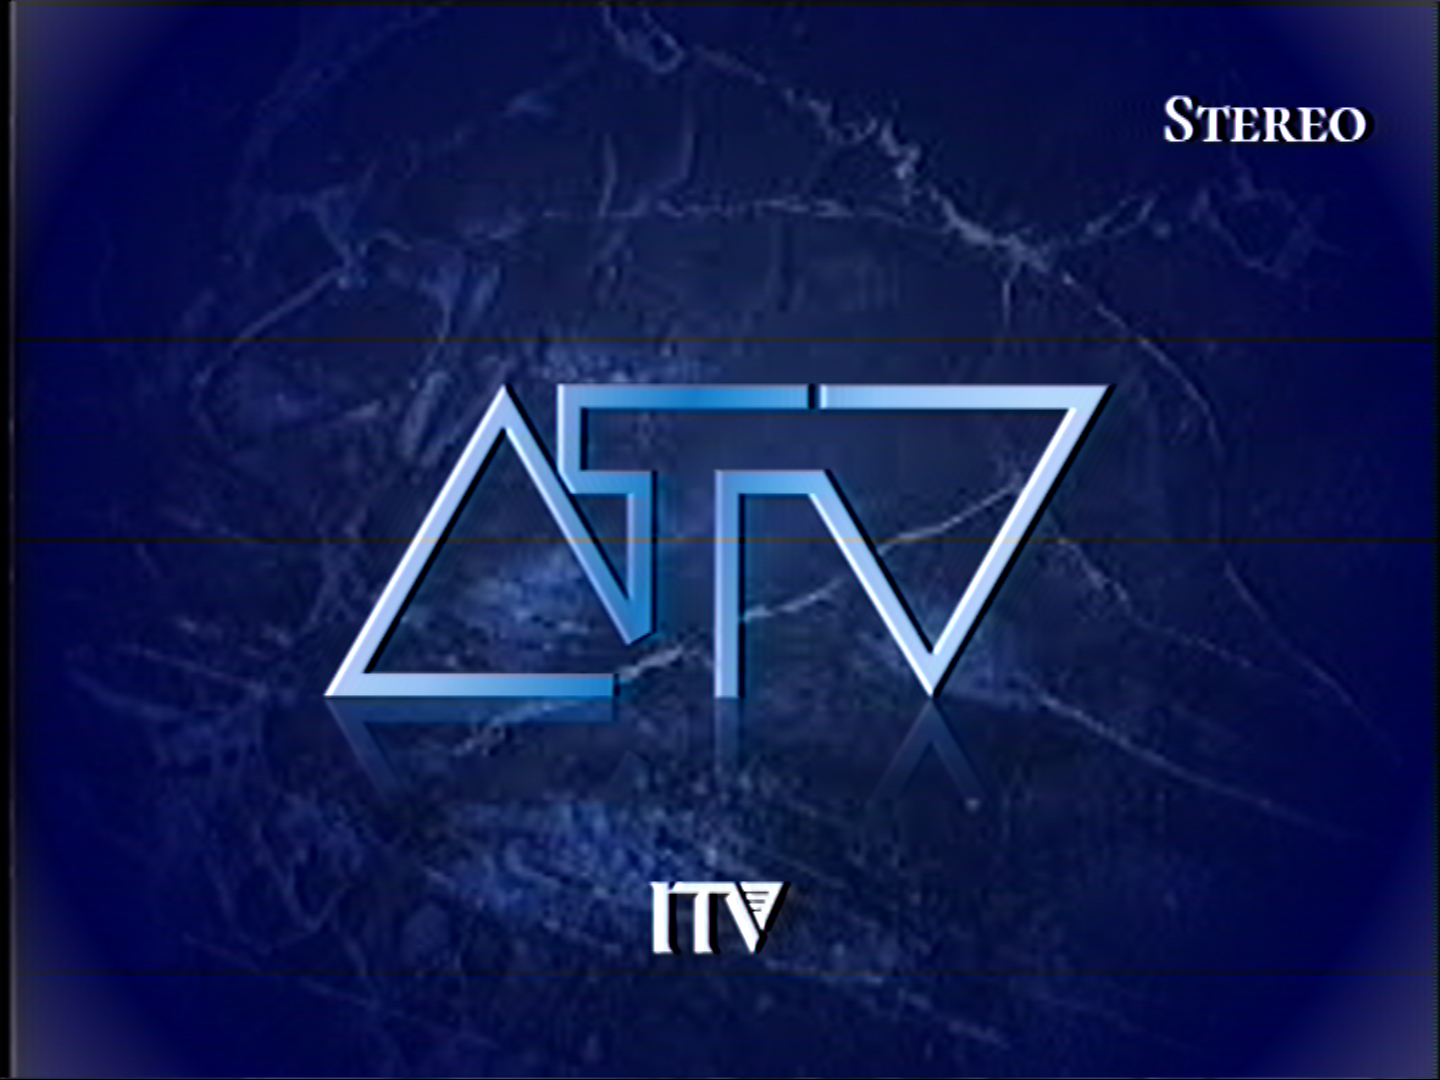 ATV Midlands (1993)